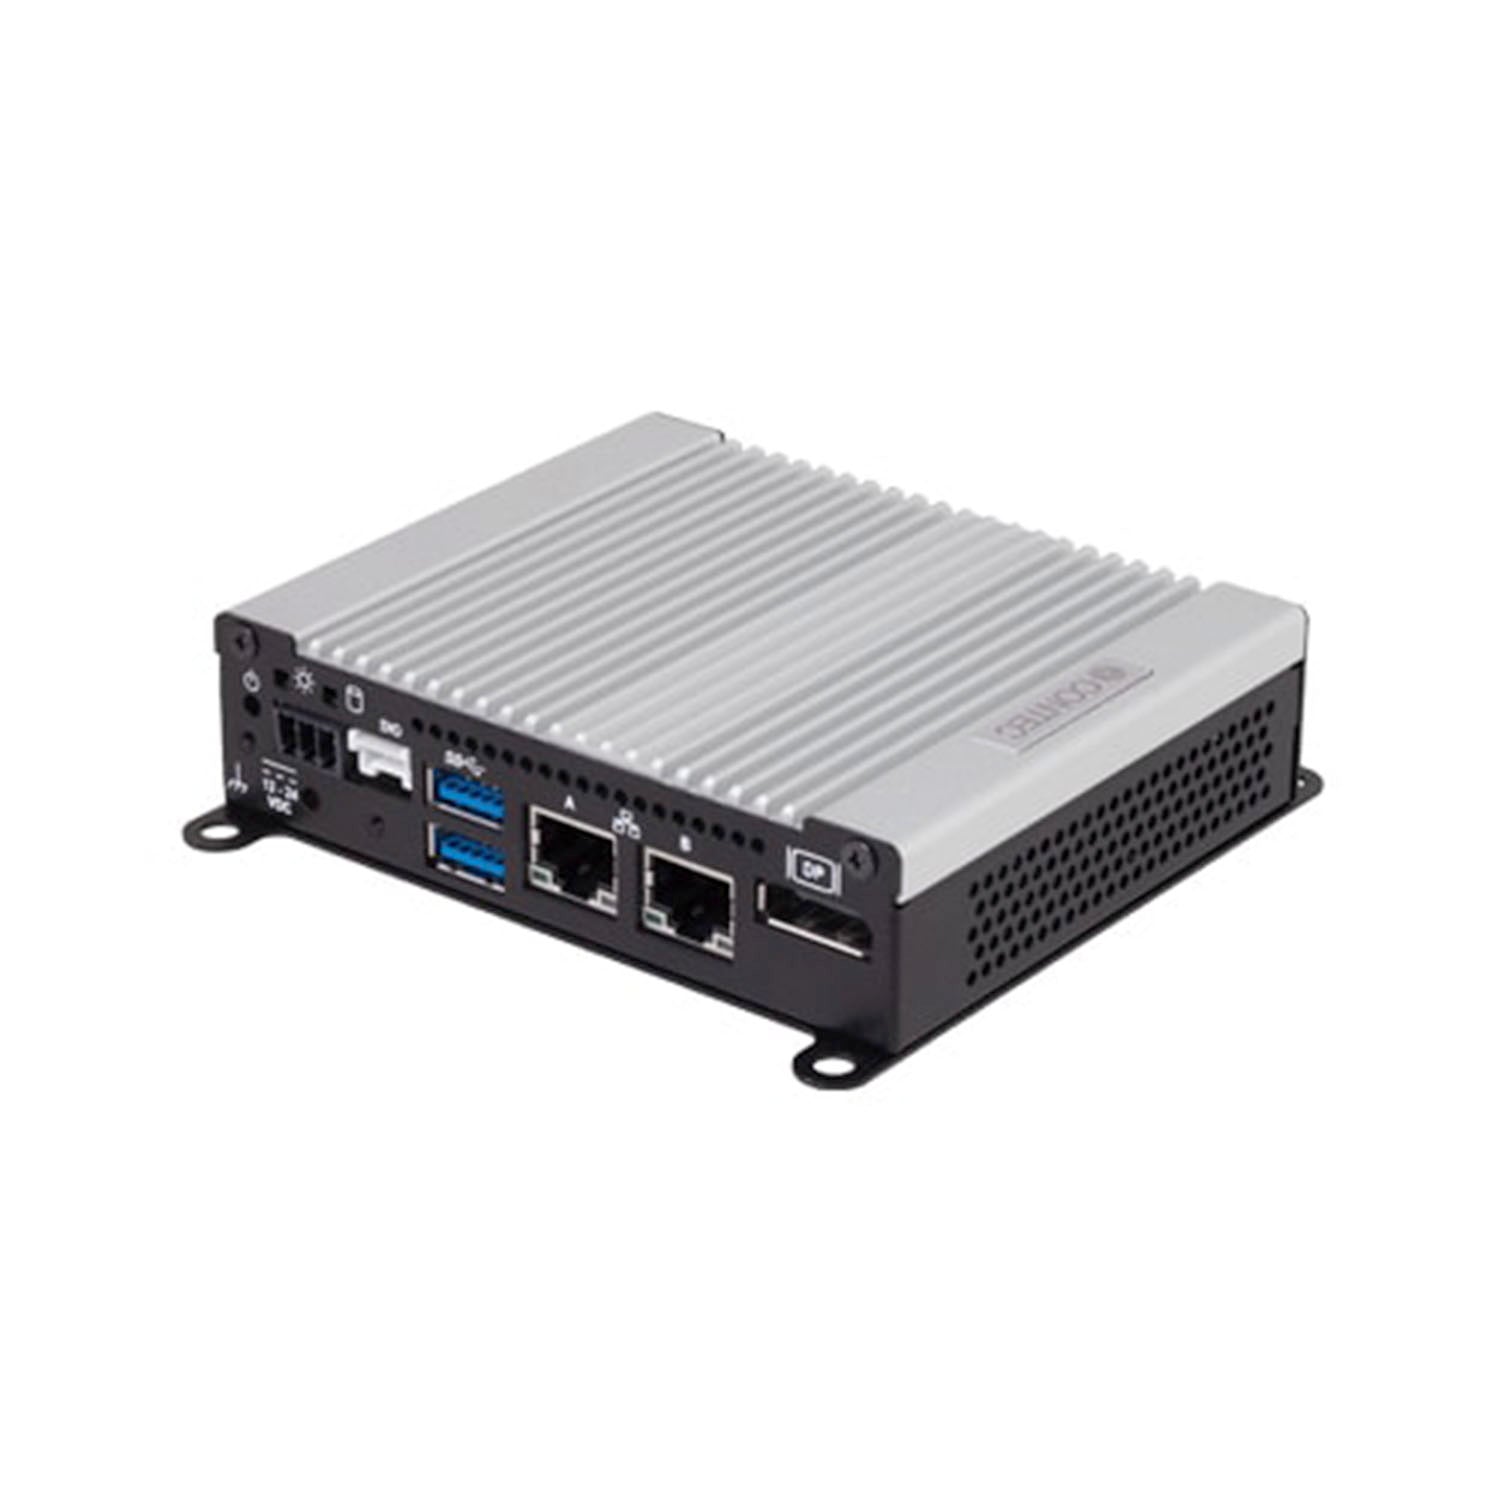 BX-U200 - Fanless Embedded PC / Ultra small design / Atom x5-E3940 (Apollo Lake) / 12-24VDC Input / -30-60C Operation